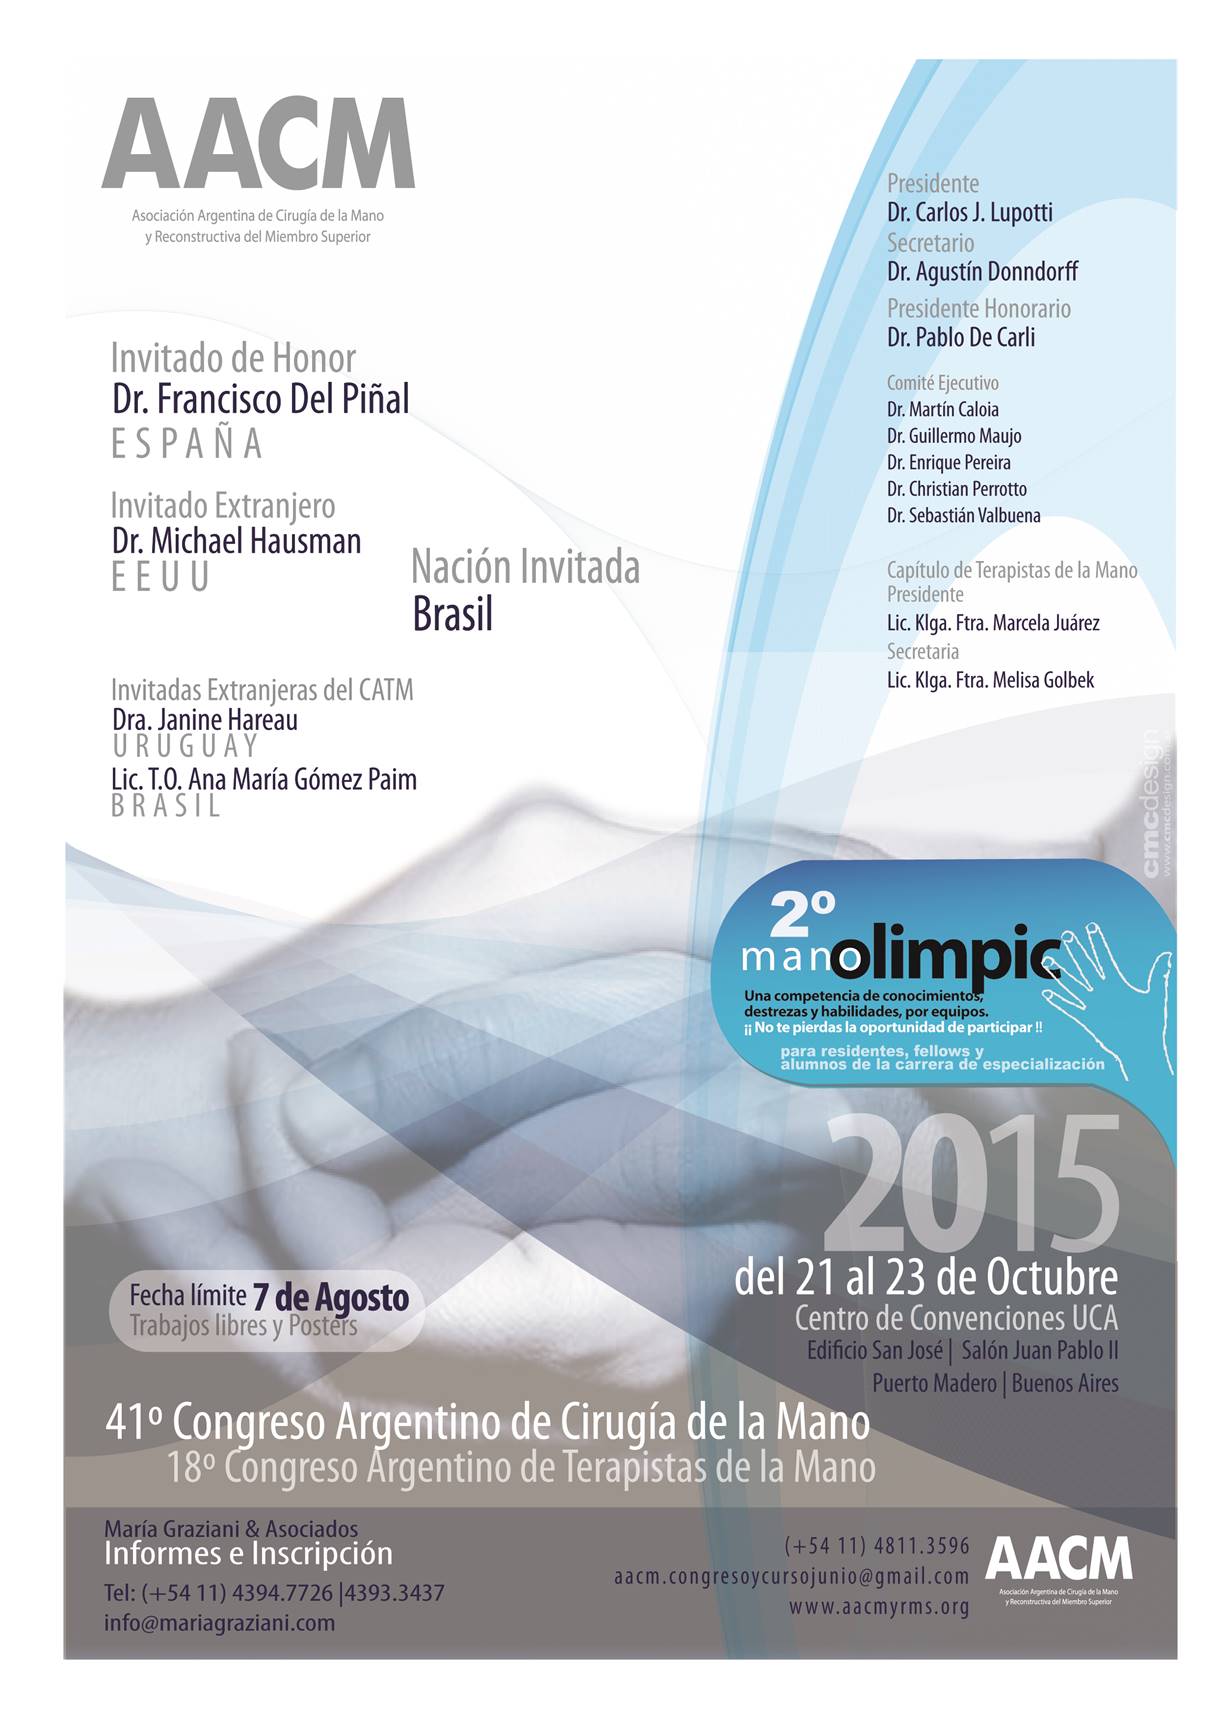 41st Argentine Congress of Hand Surgery, congress poster